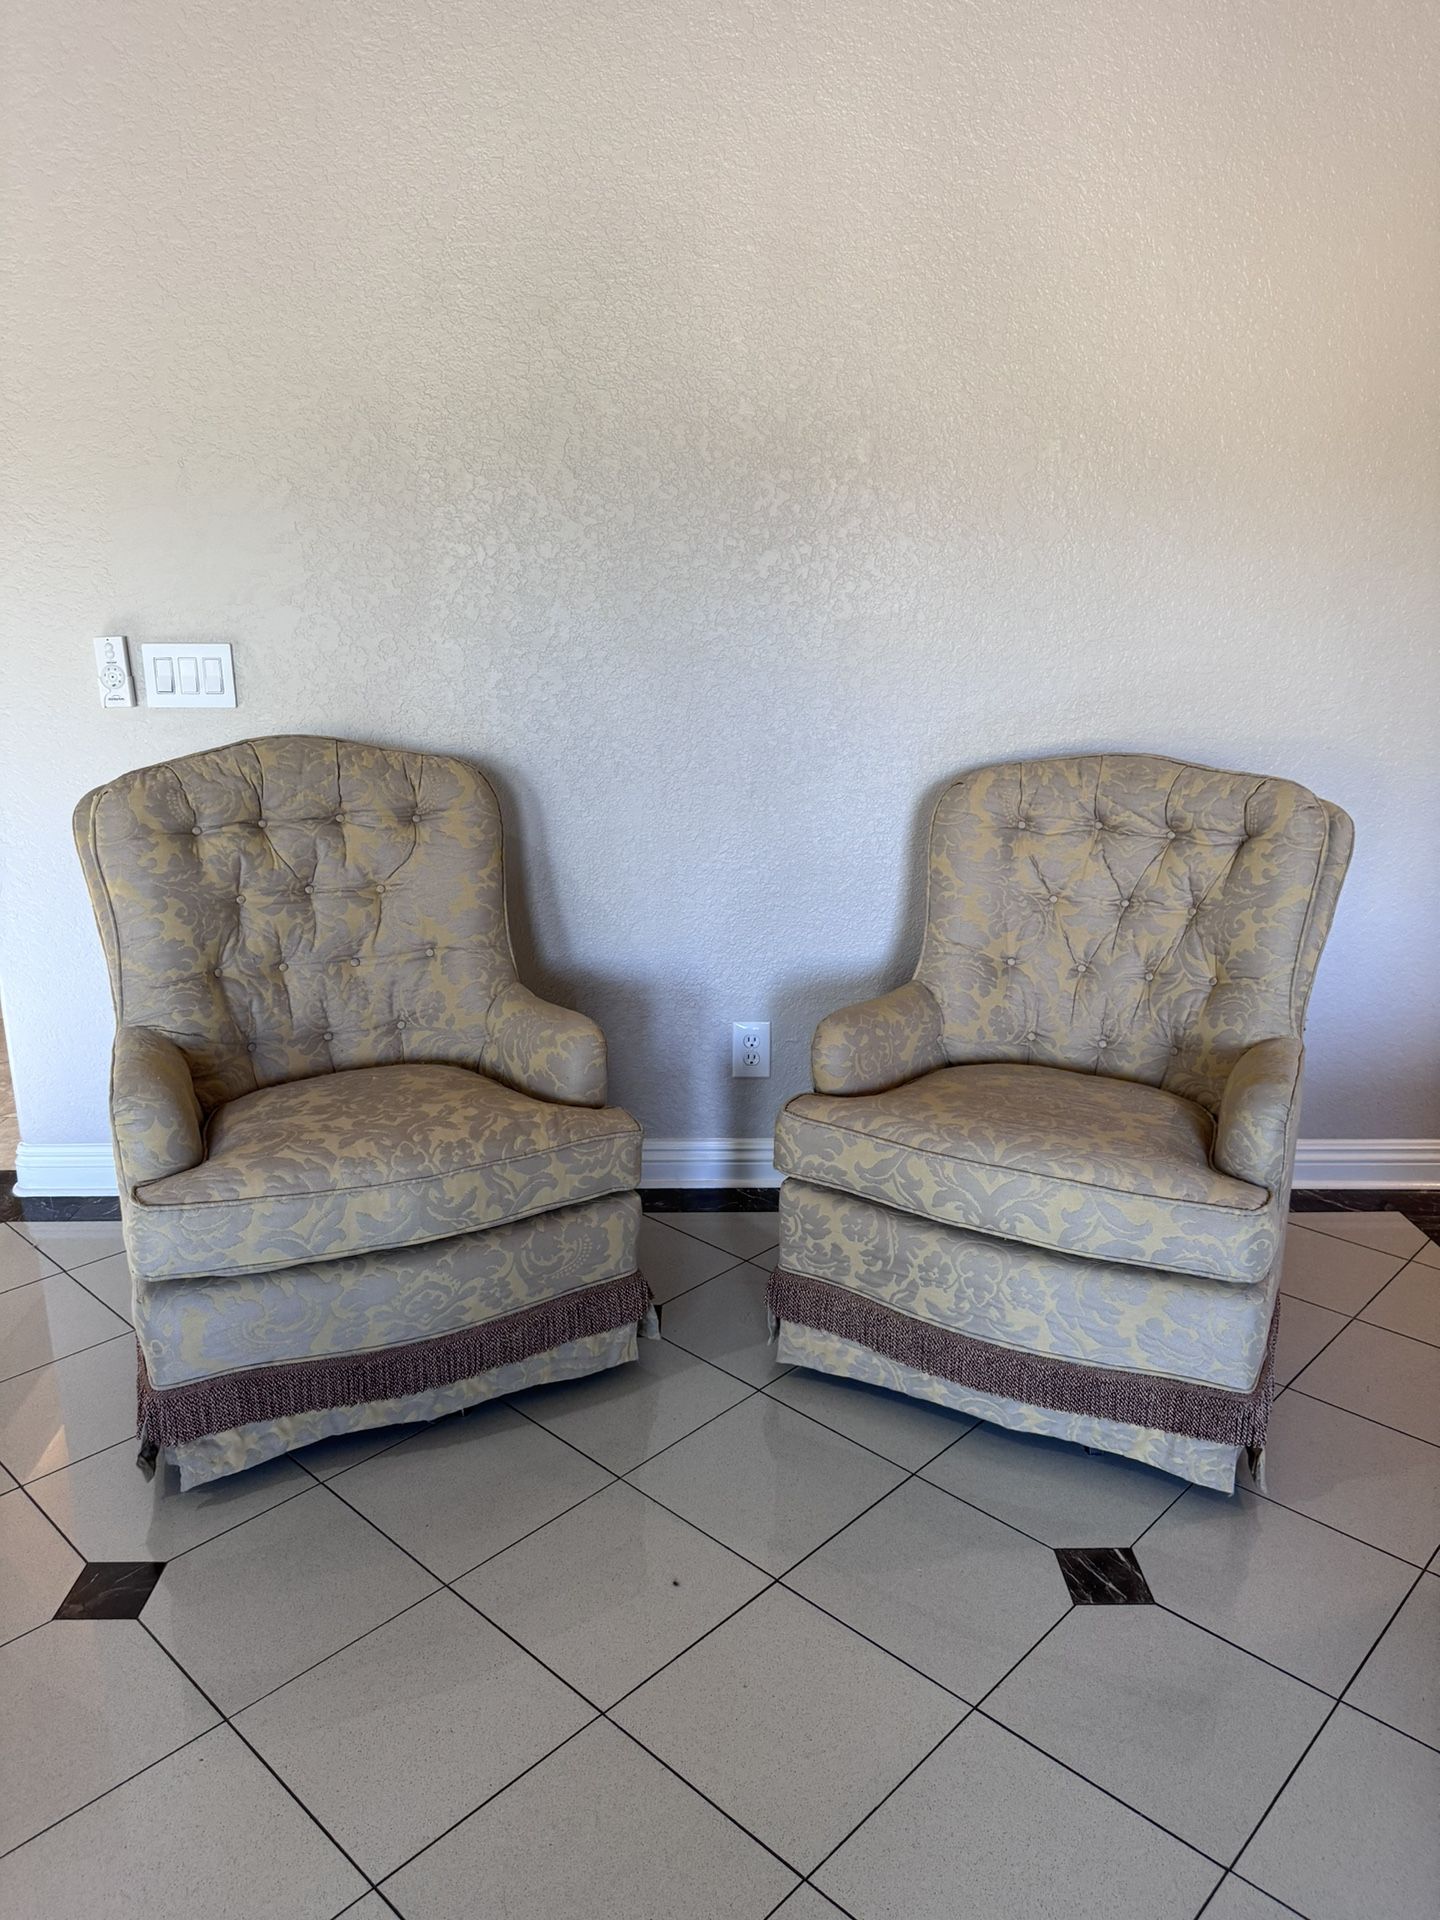 Set of 2 Vintage Yellow / Tan Brocade Swivel Chairs